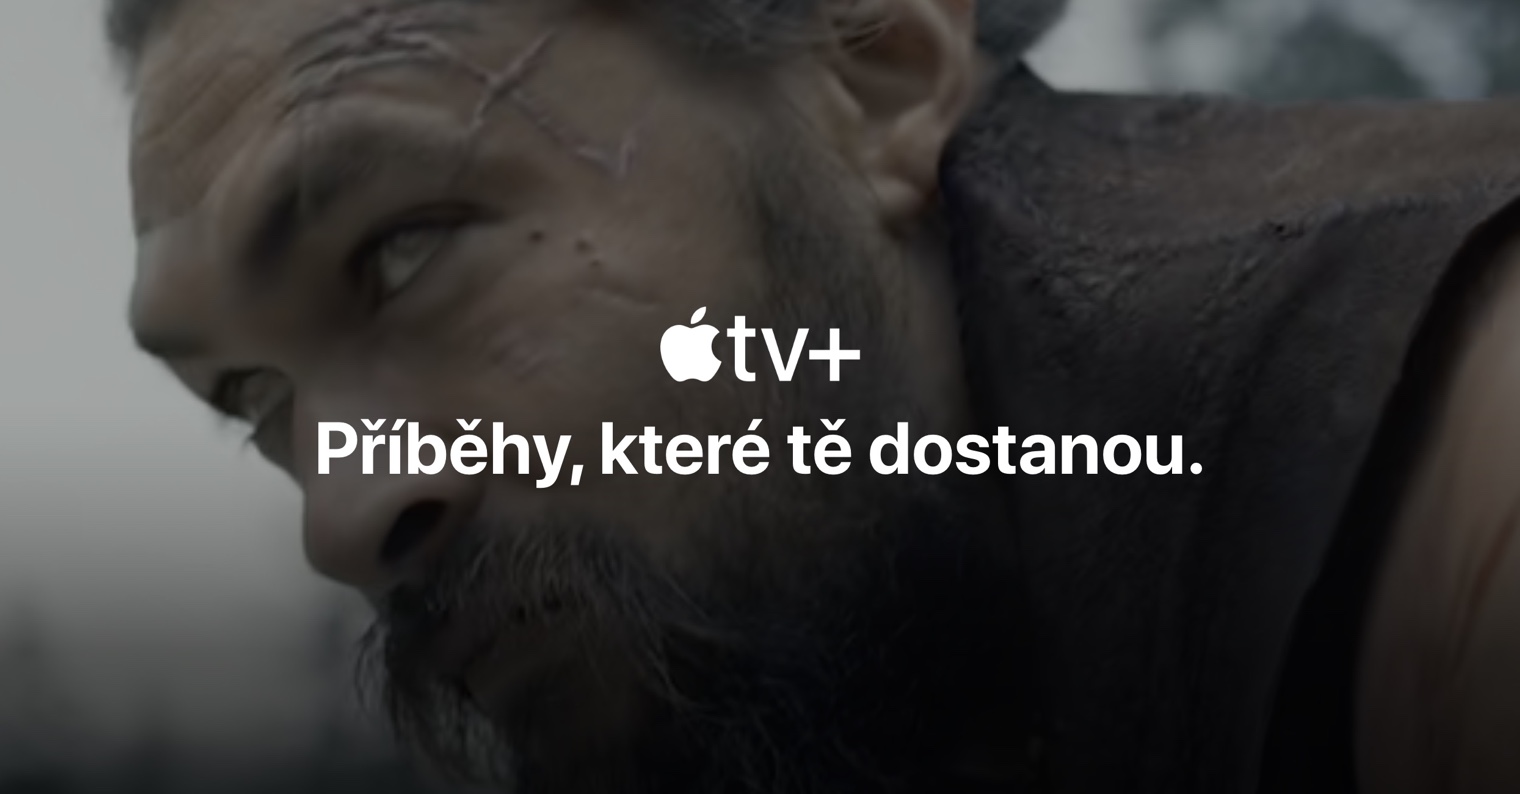 https://jablickar.cz/wp-content/uploads/2019/10/Apple-TV-plus-FB.jpg